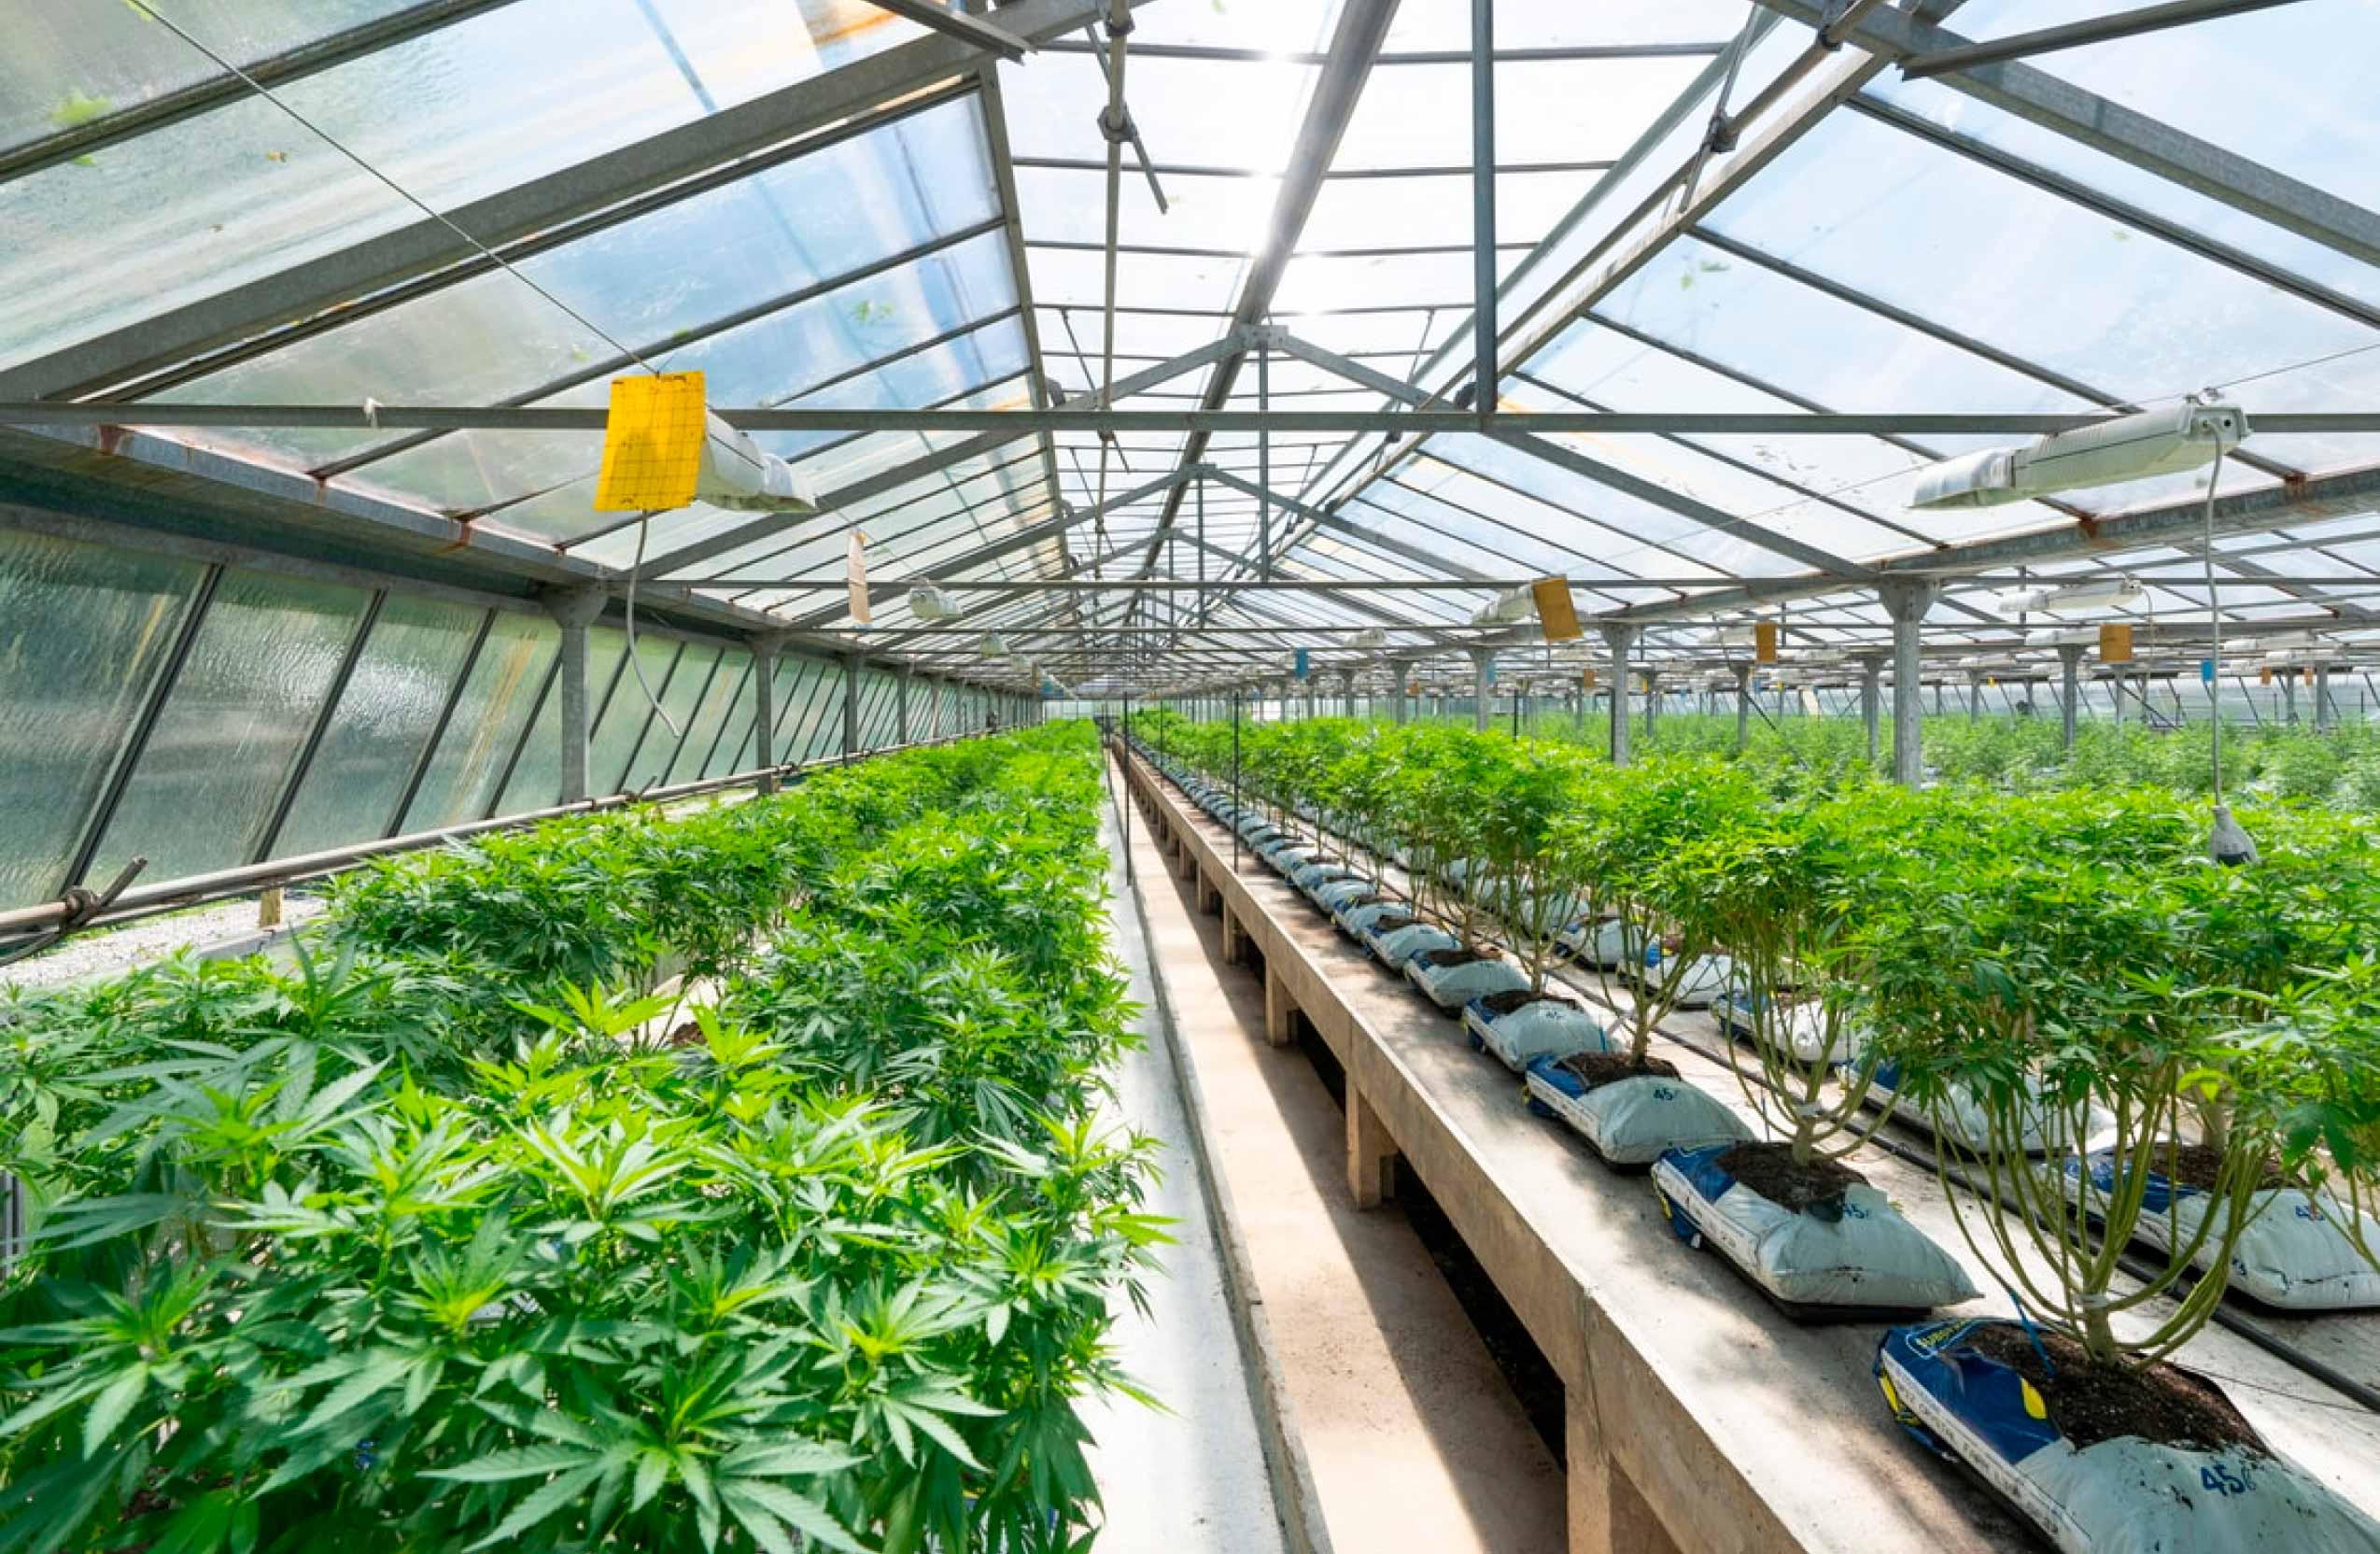 sungrown cannabis in a greenhouse